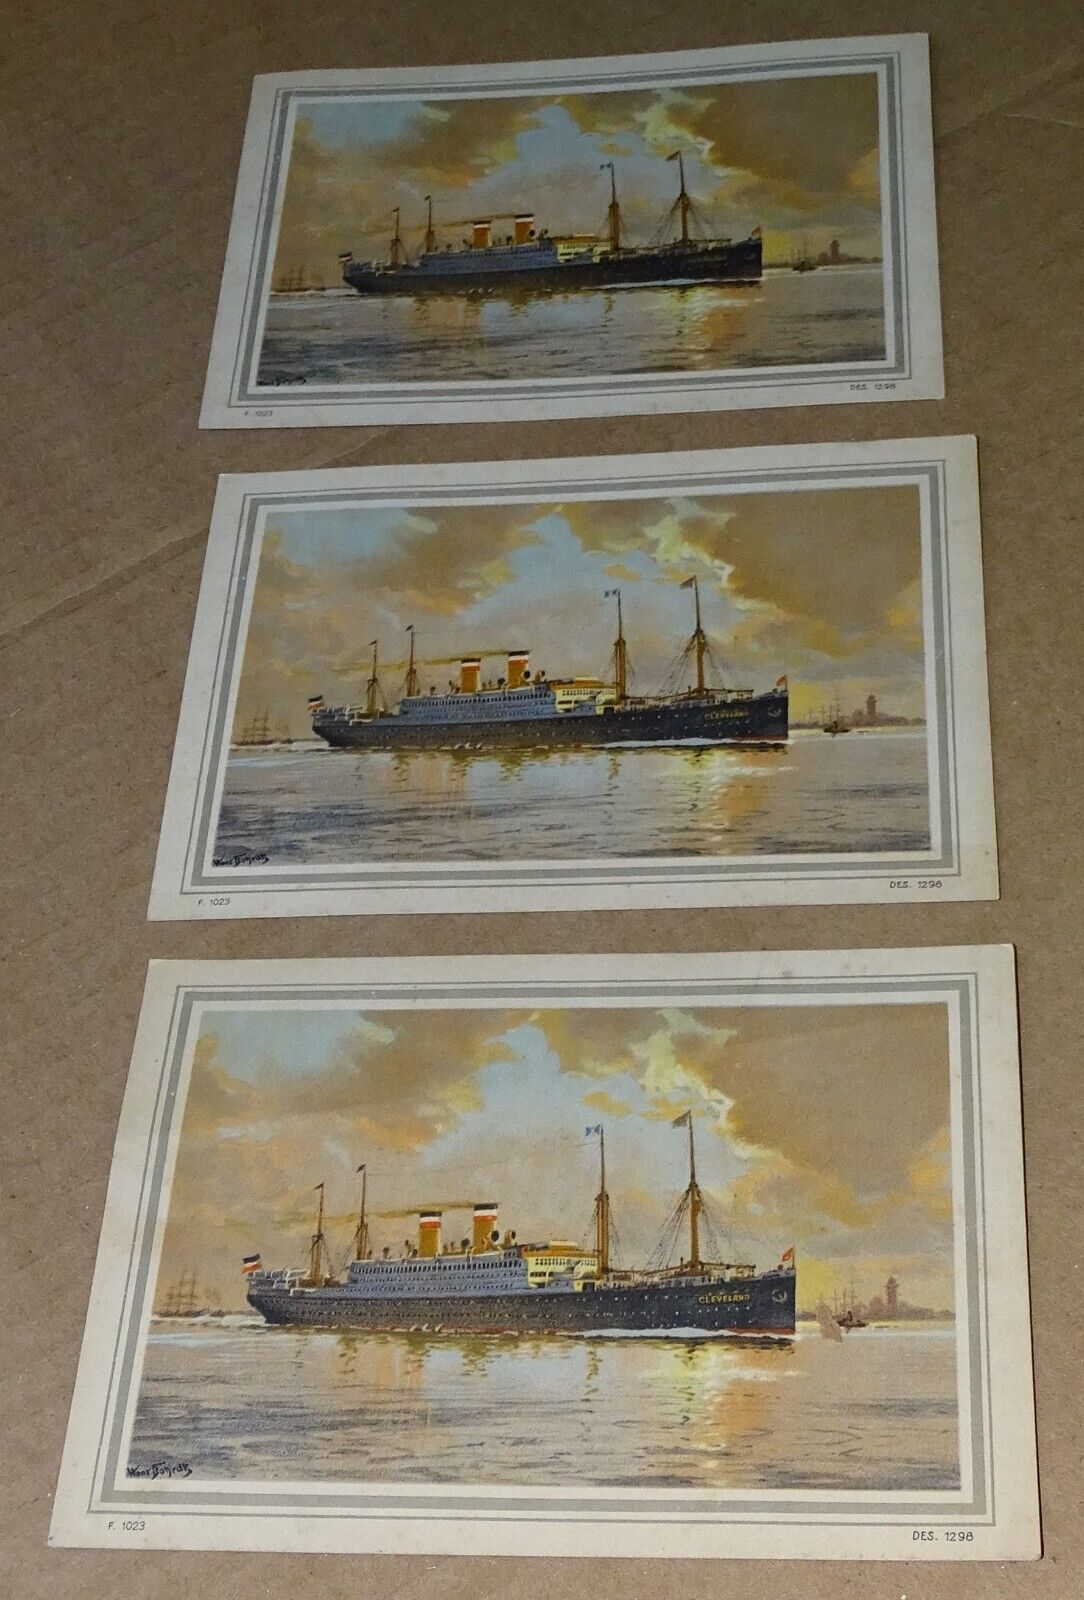 3 old Postcards HAMBURG-AMERIKA (S/S Cleveland, Hamburg America Line)